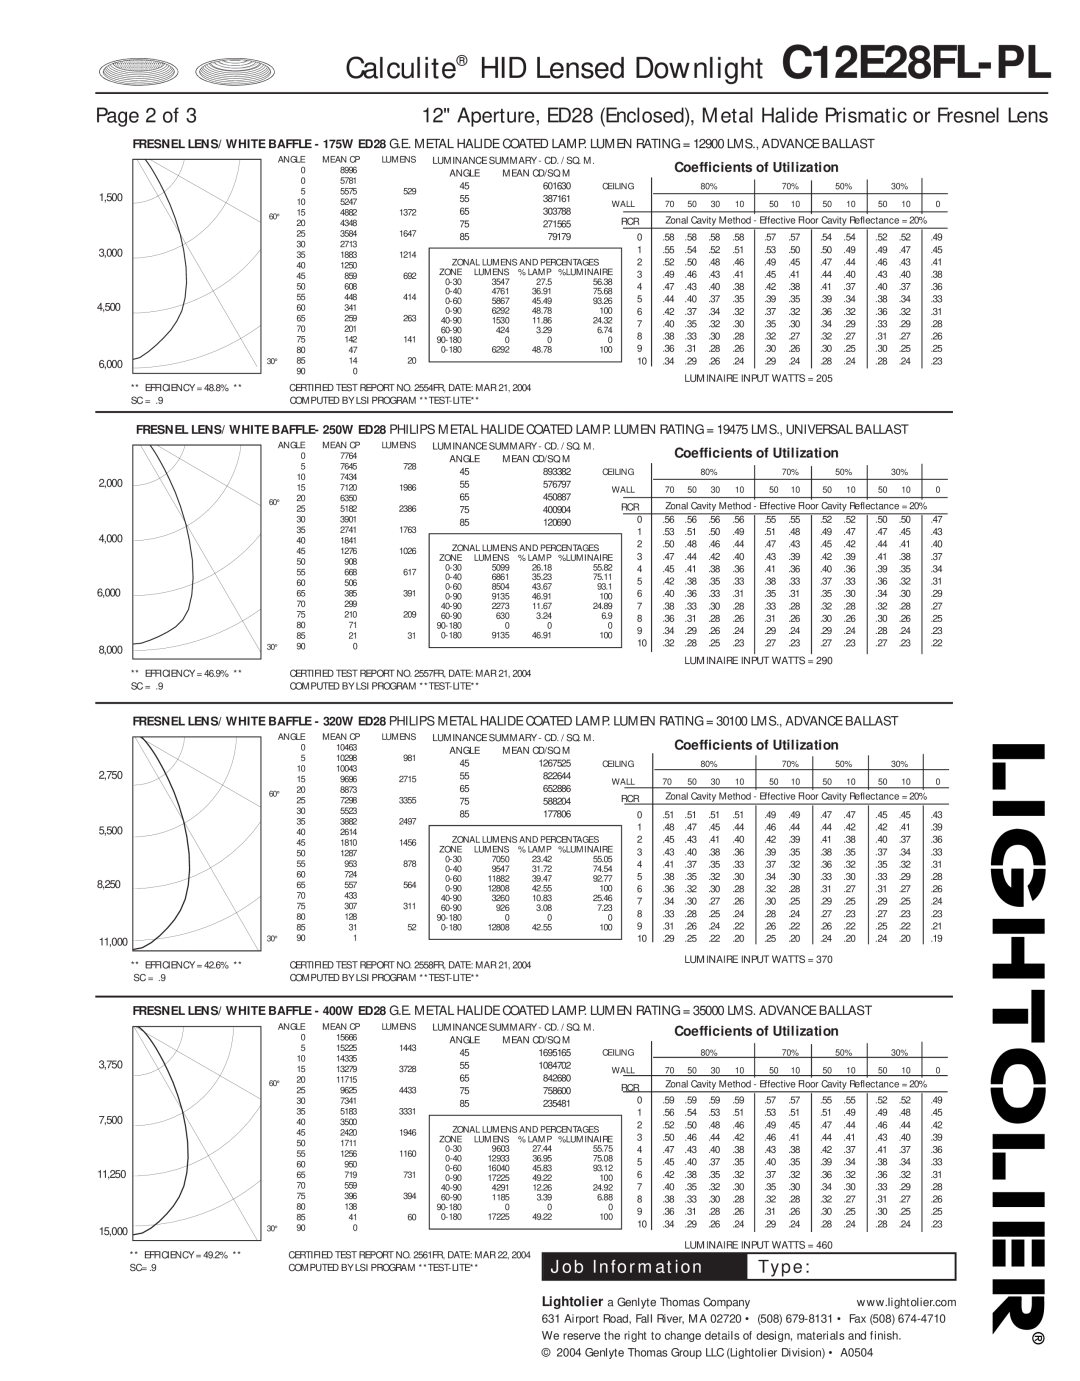 Lightolier specifications Calculite HID Lensed Downlight C12E28FL-PL, Type, Job Information 